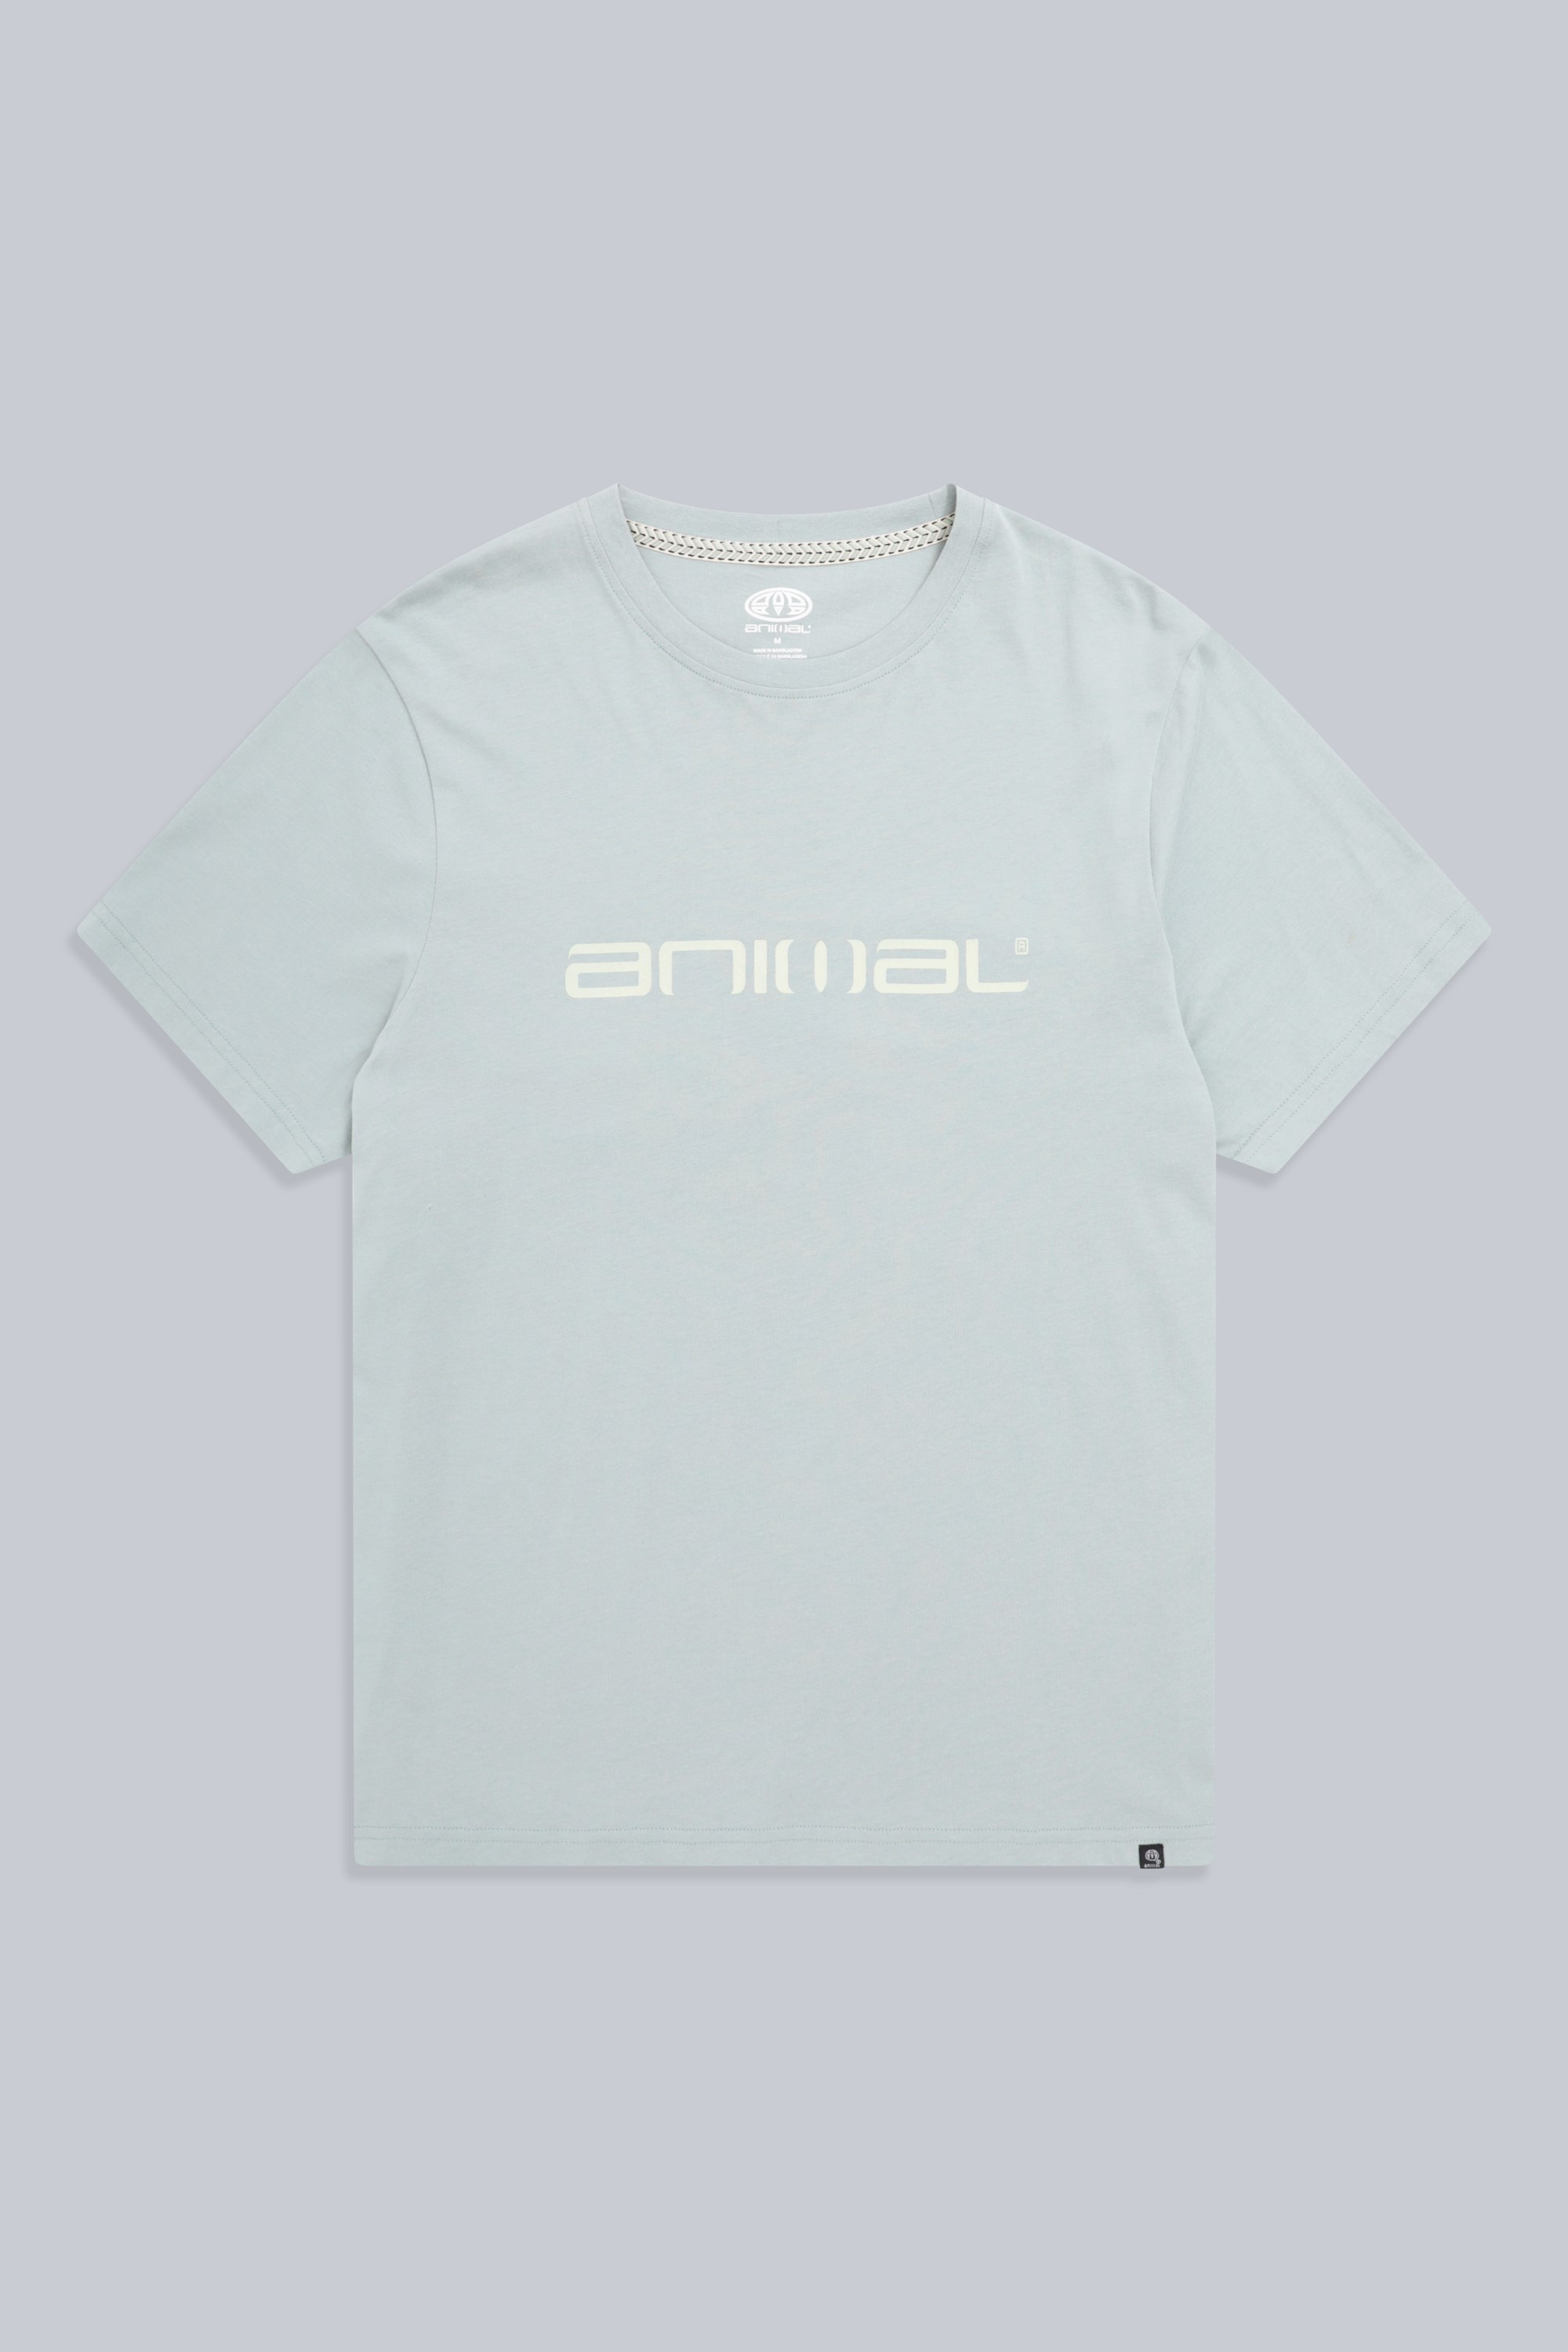 Animal Classico Bio-Baumwoll Herren T-Shirt - Dunkel Türkis